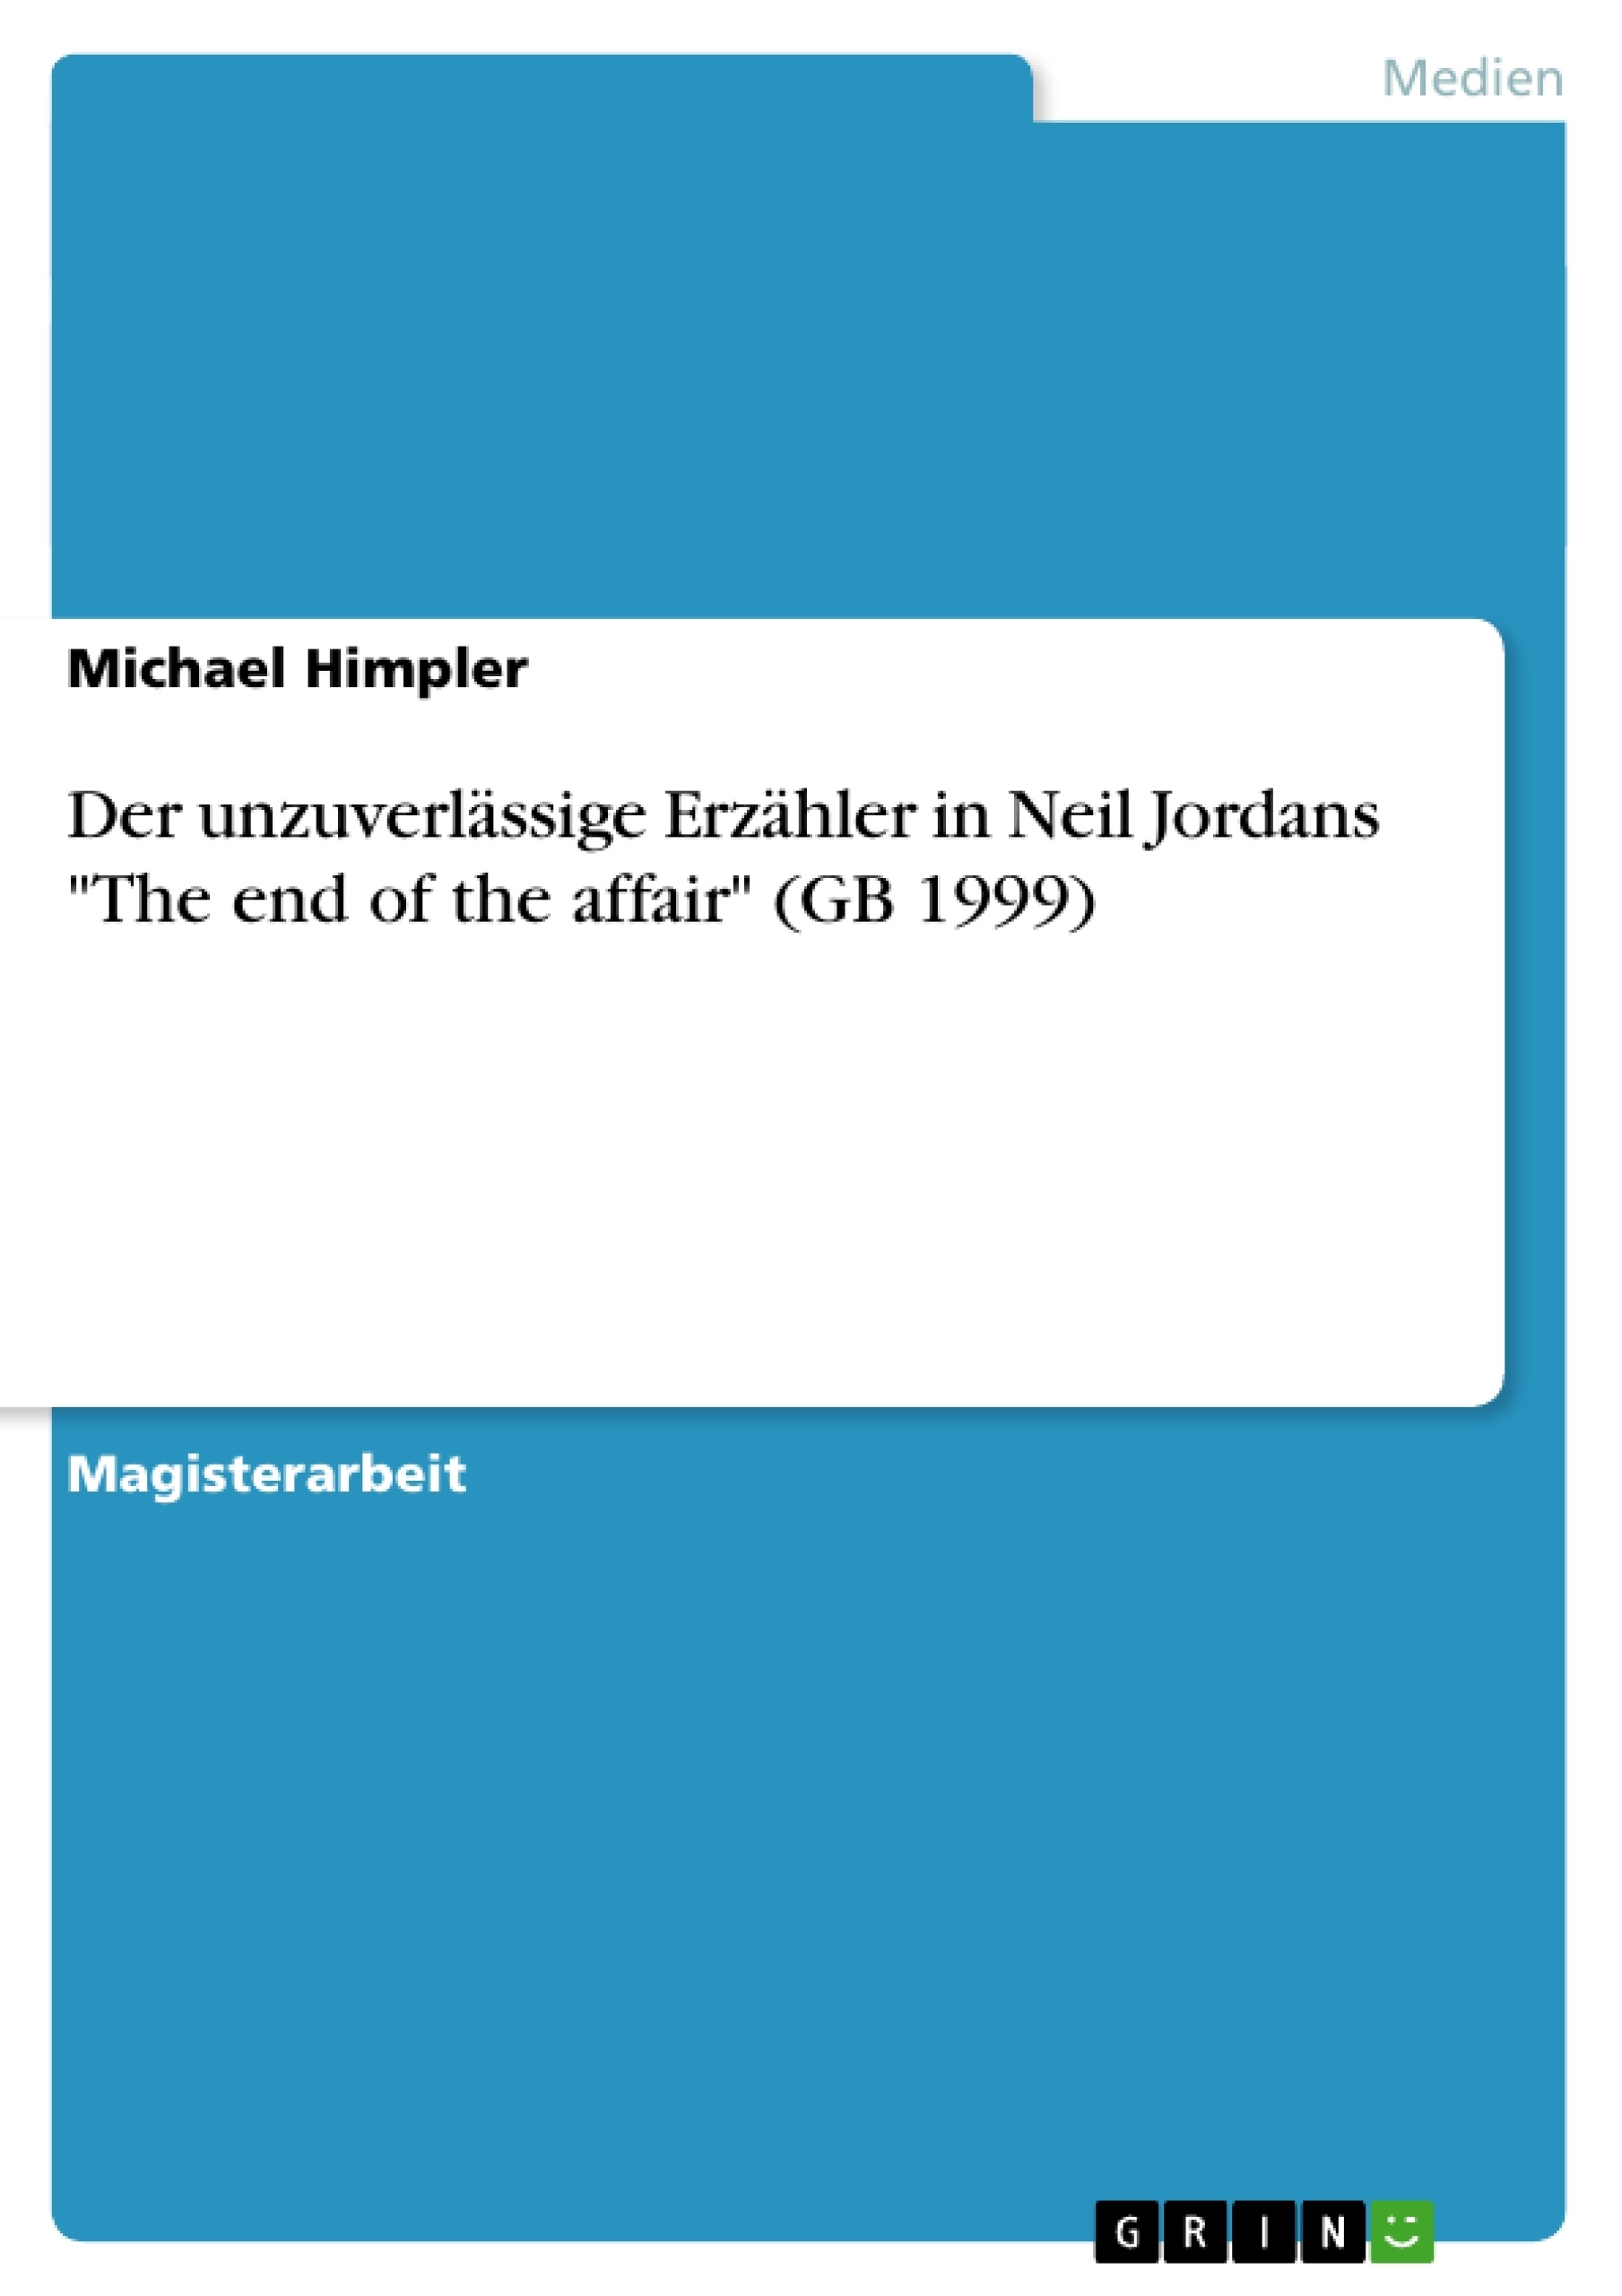 Titre: Der unzuverlässige Erzähler in Neil Jordans "The end of the affair" (GB 1999)